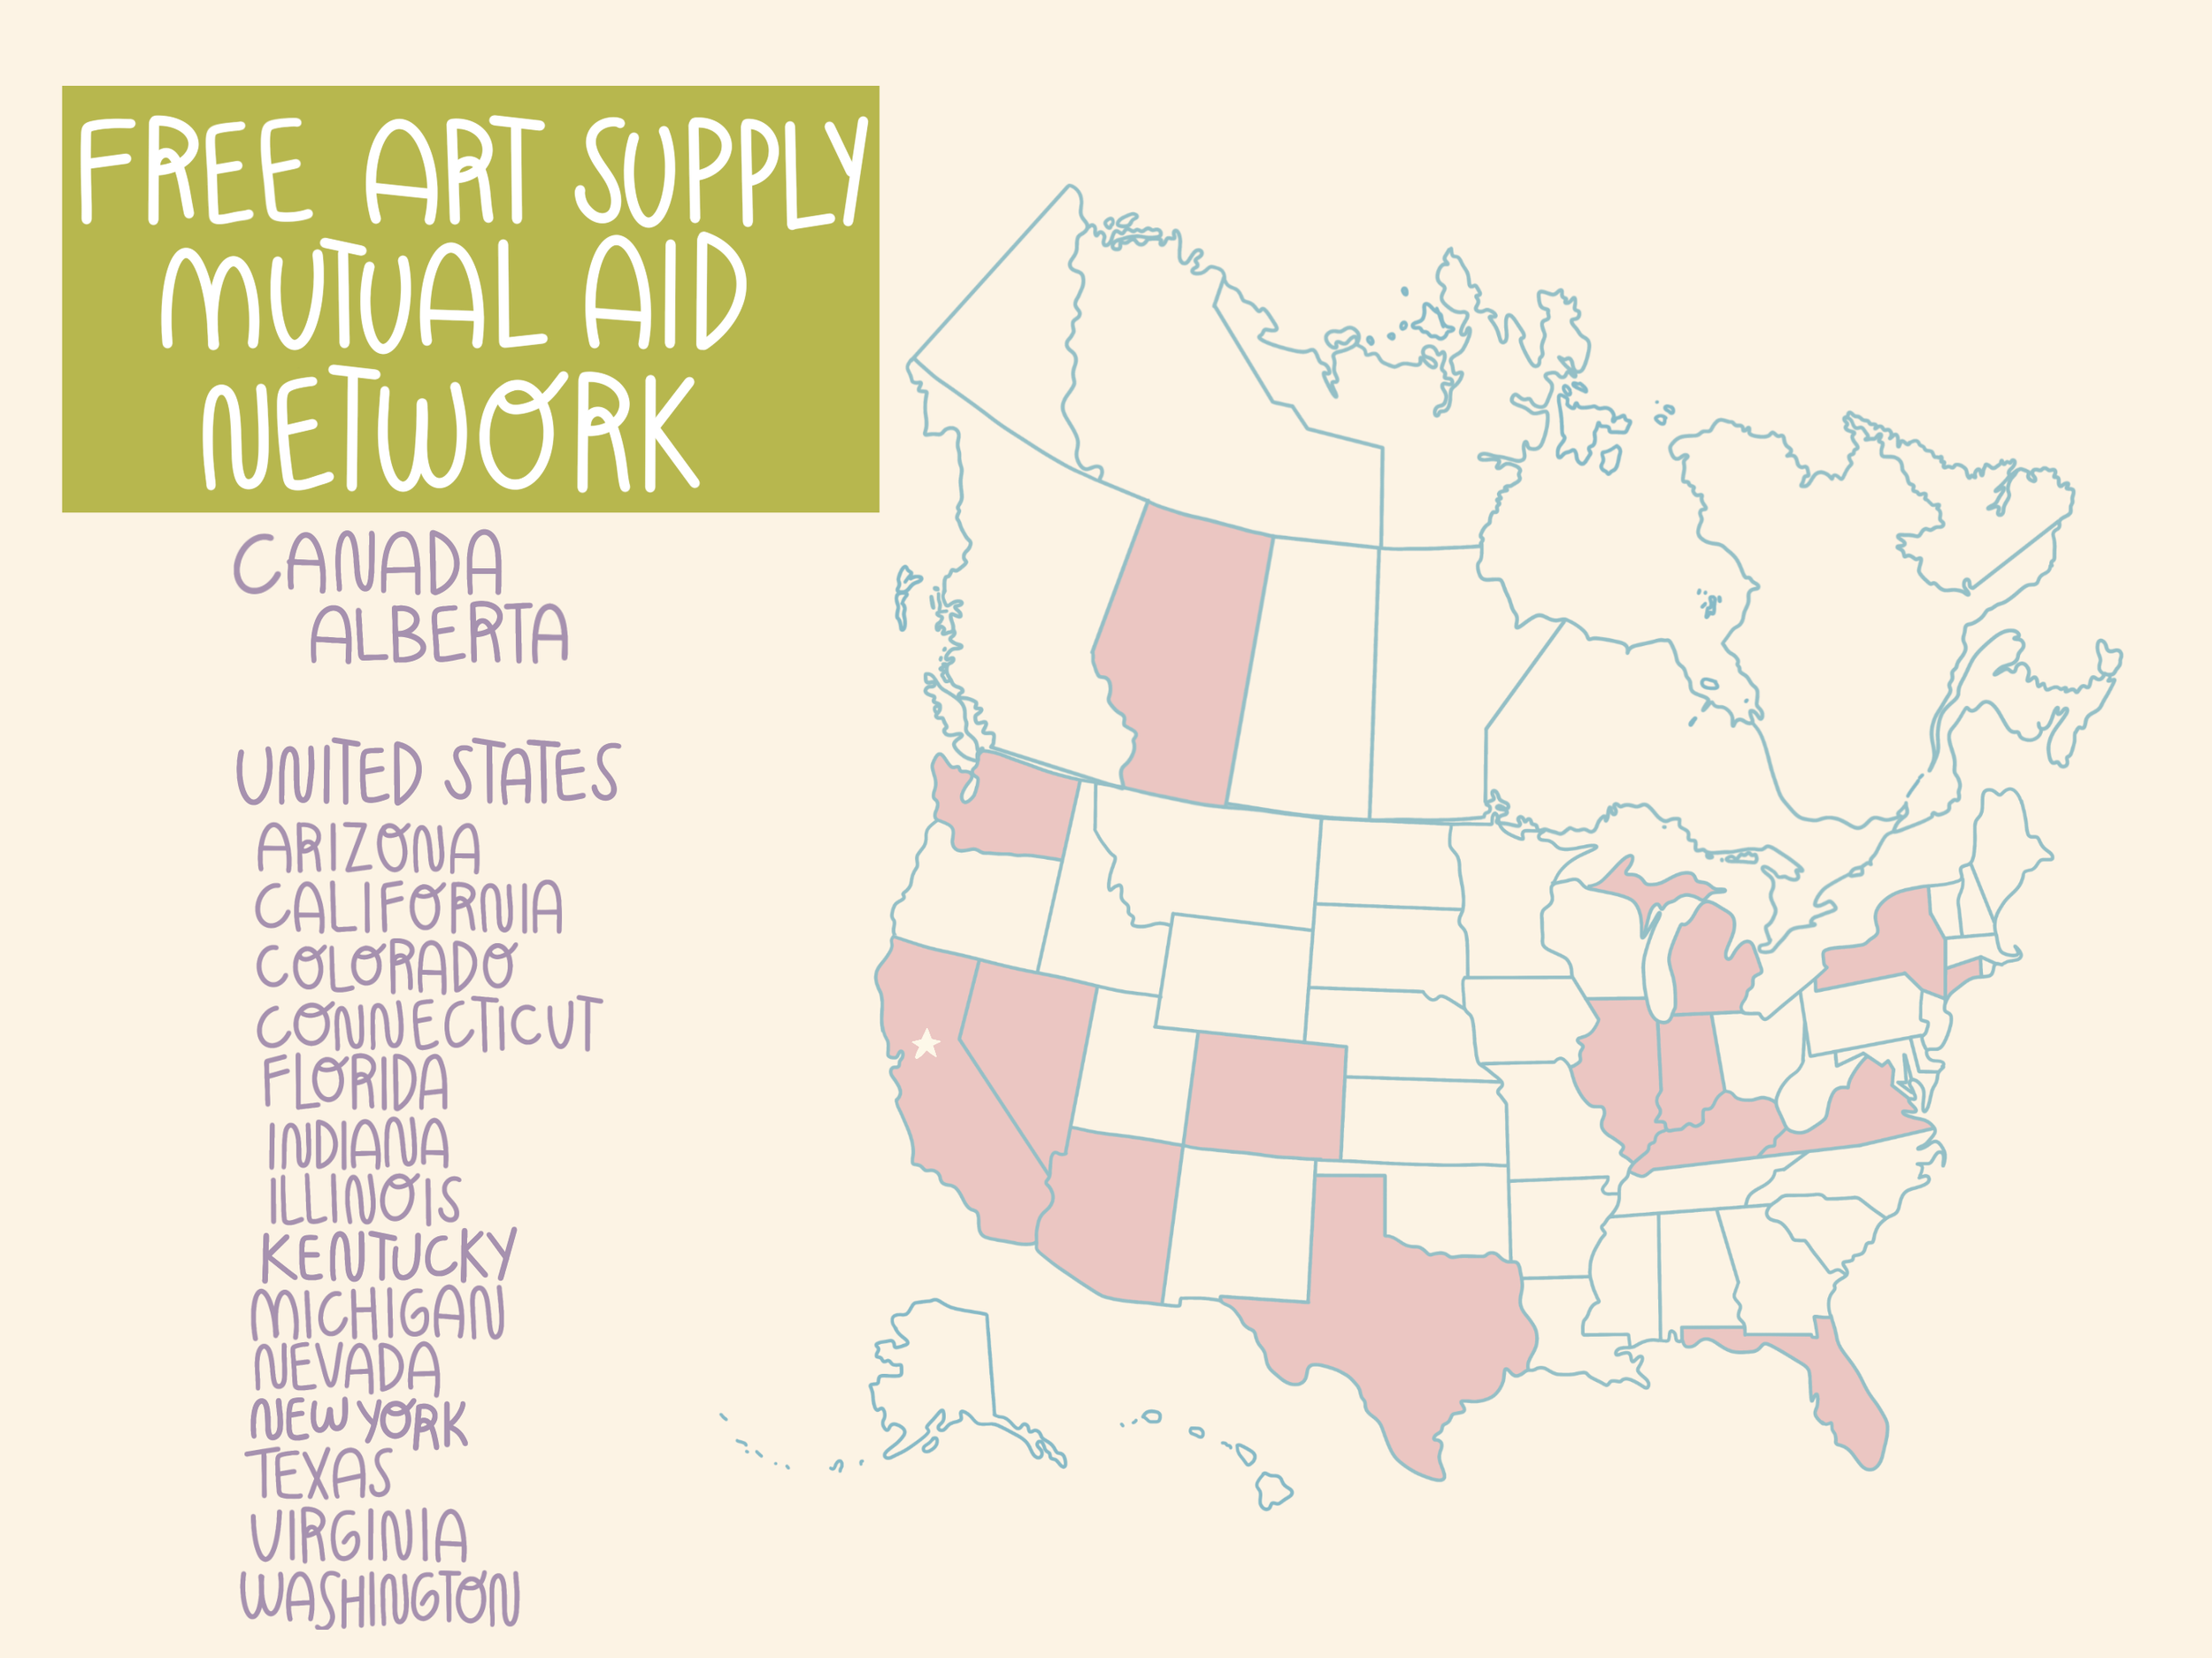 Free art supplies for non-profit organizations